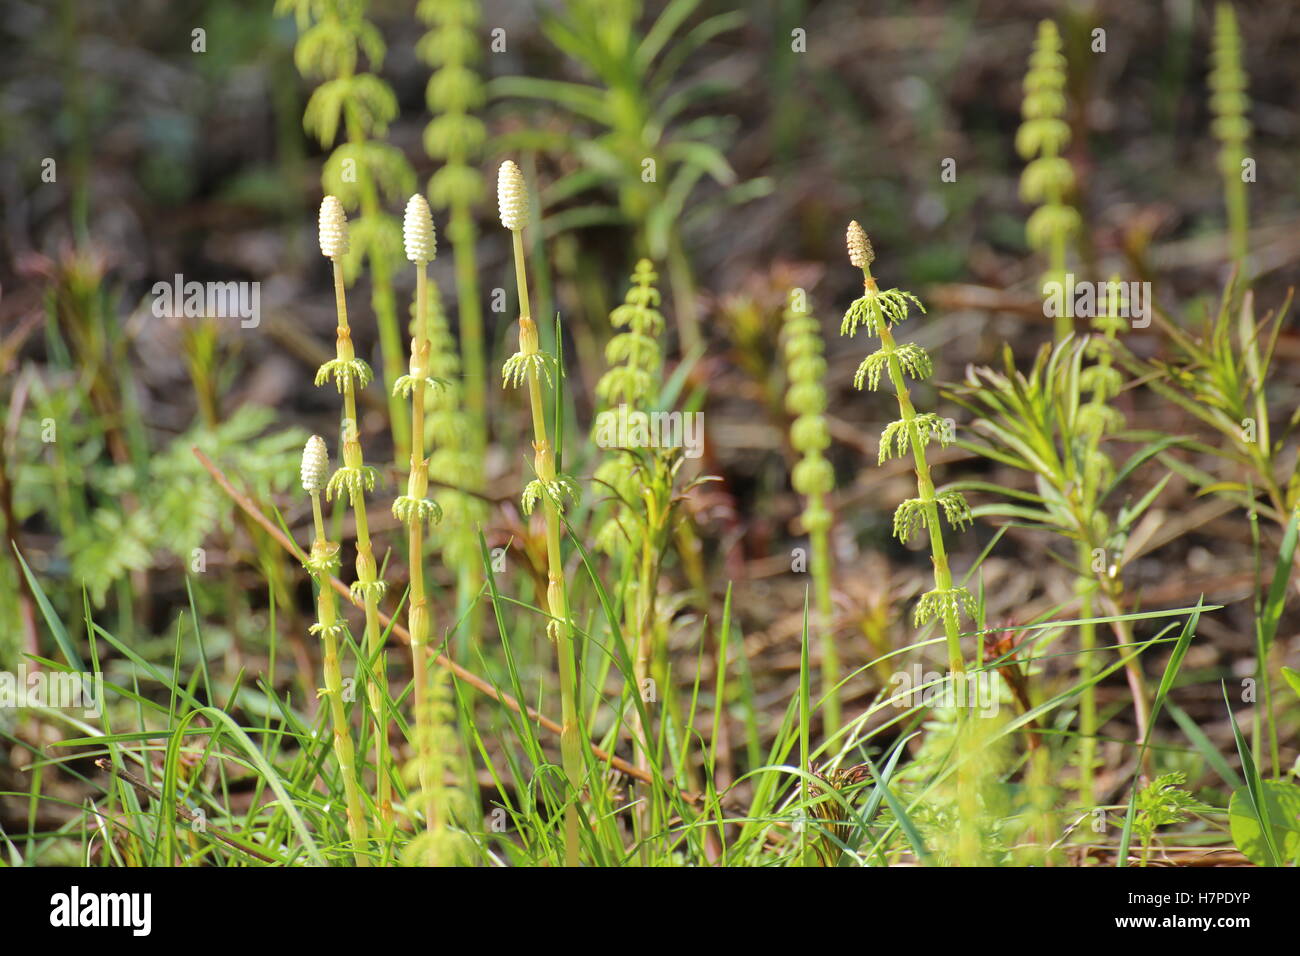 Several wood horsetails (Equisetum sylvaticum) in the nature. Stock Photo